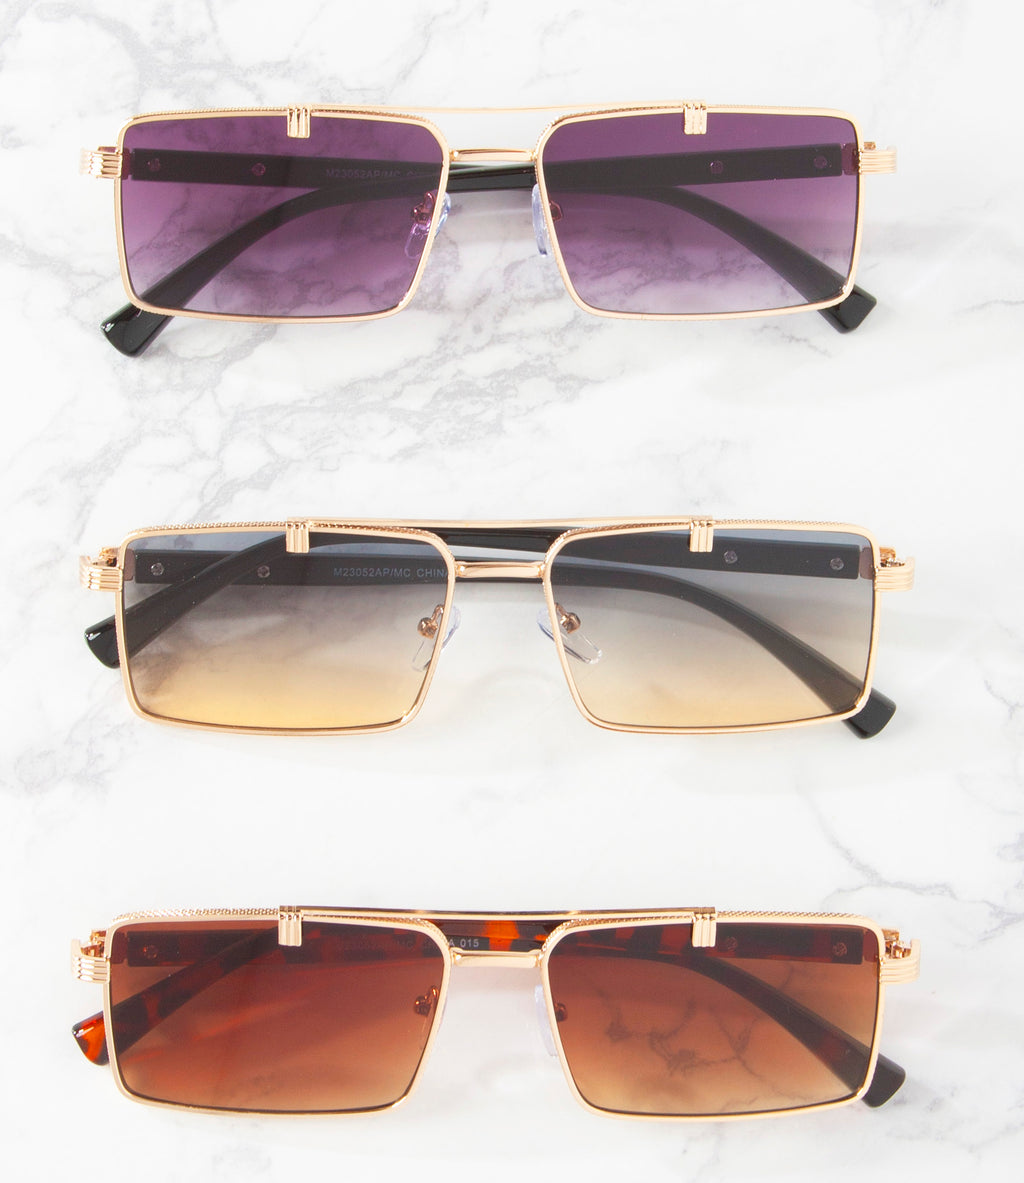 Wholesale Sunglasses - M23052AP/MC - Pack of 12